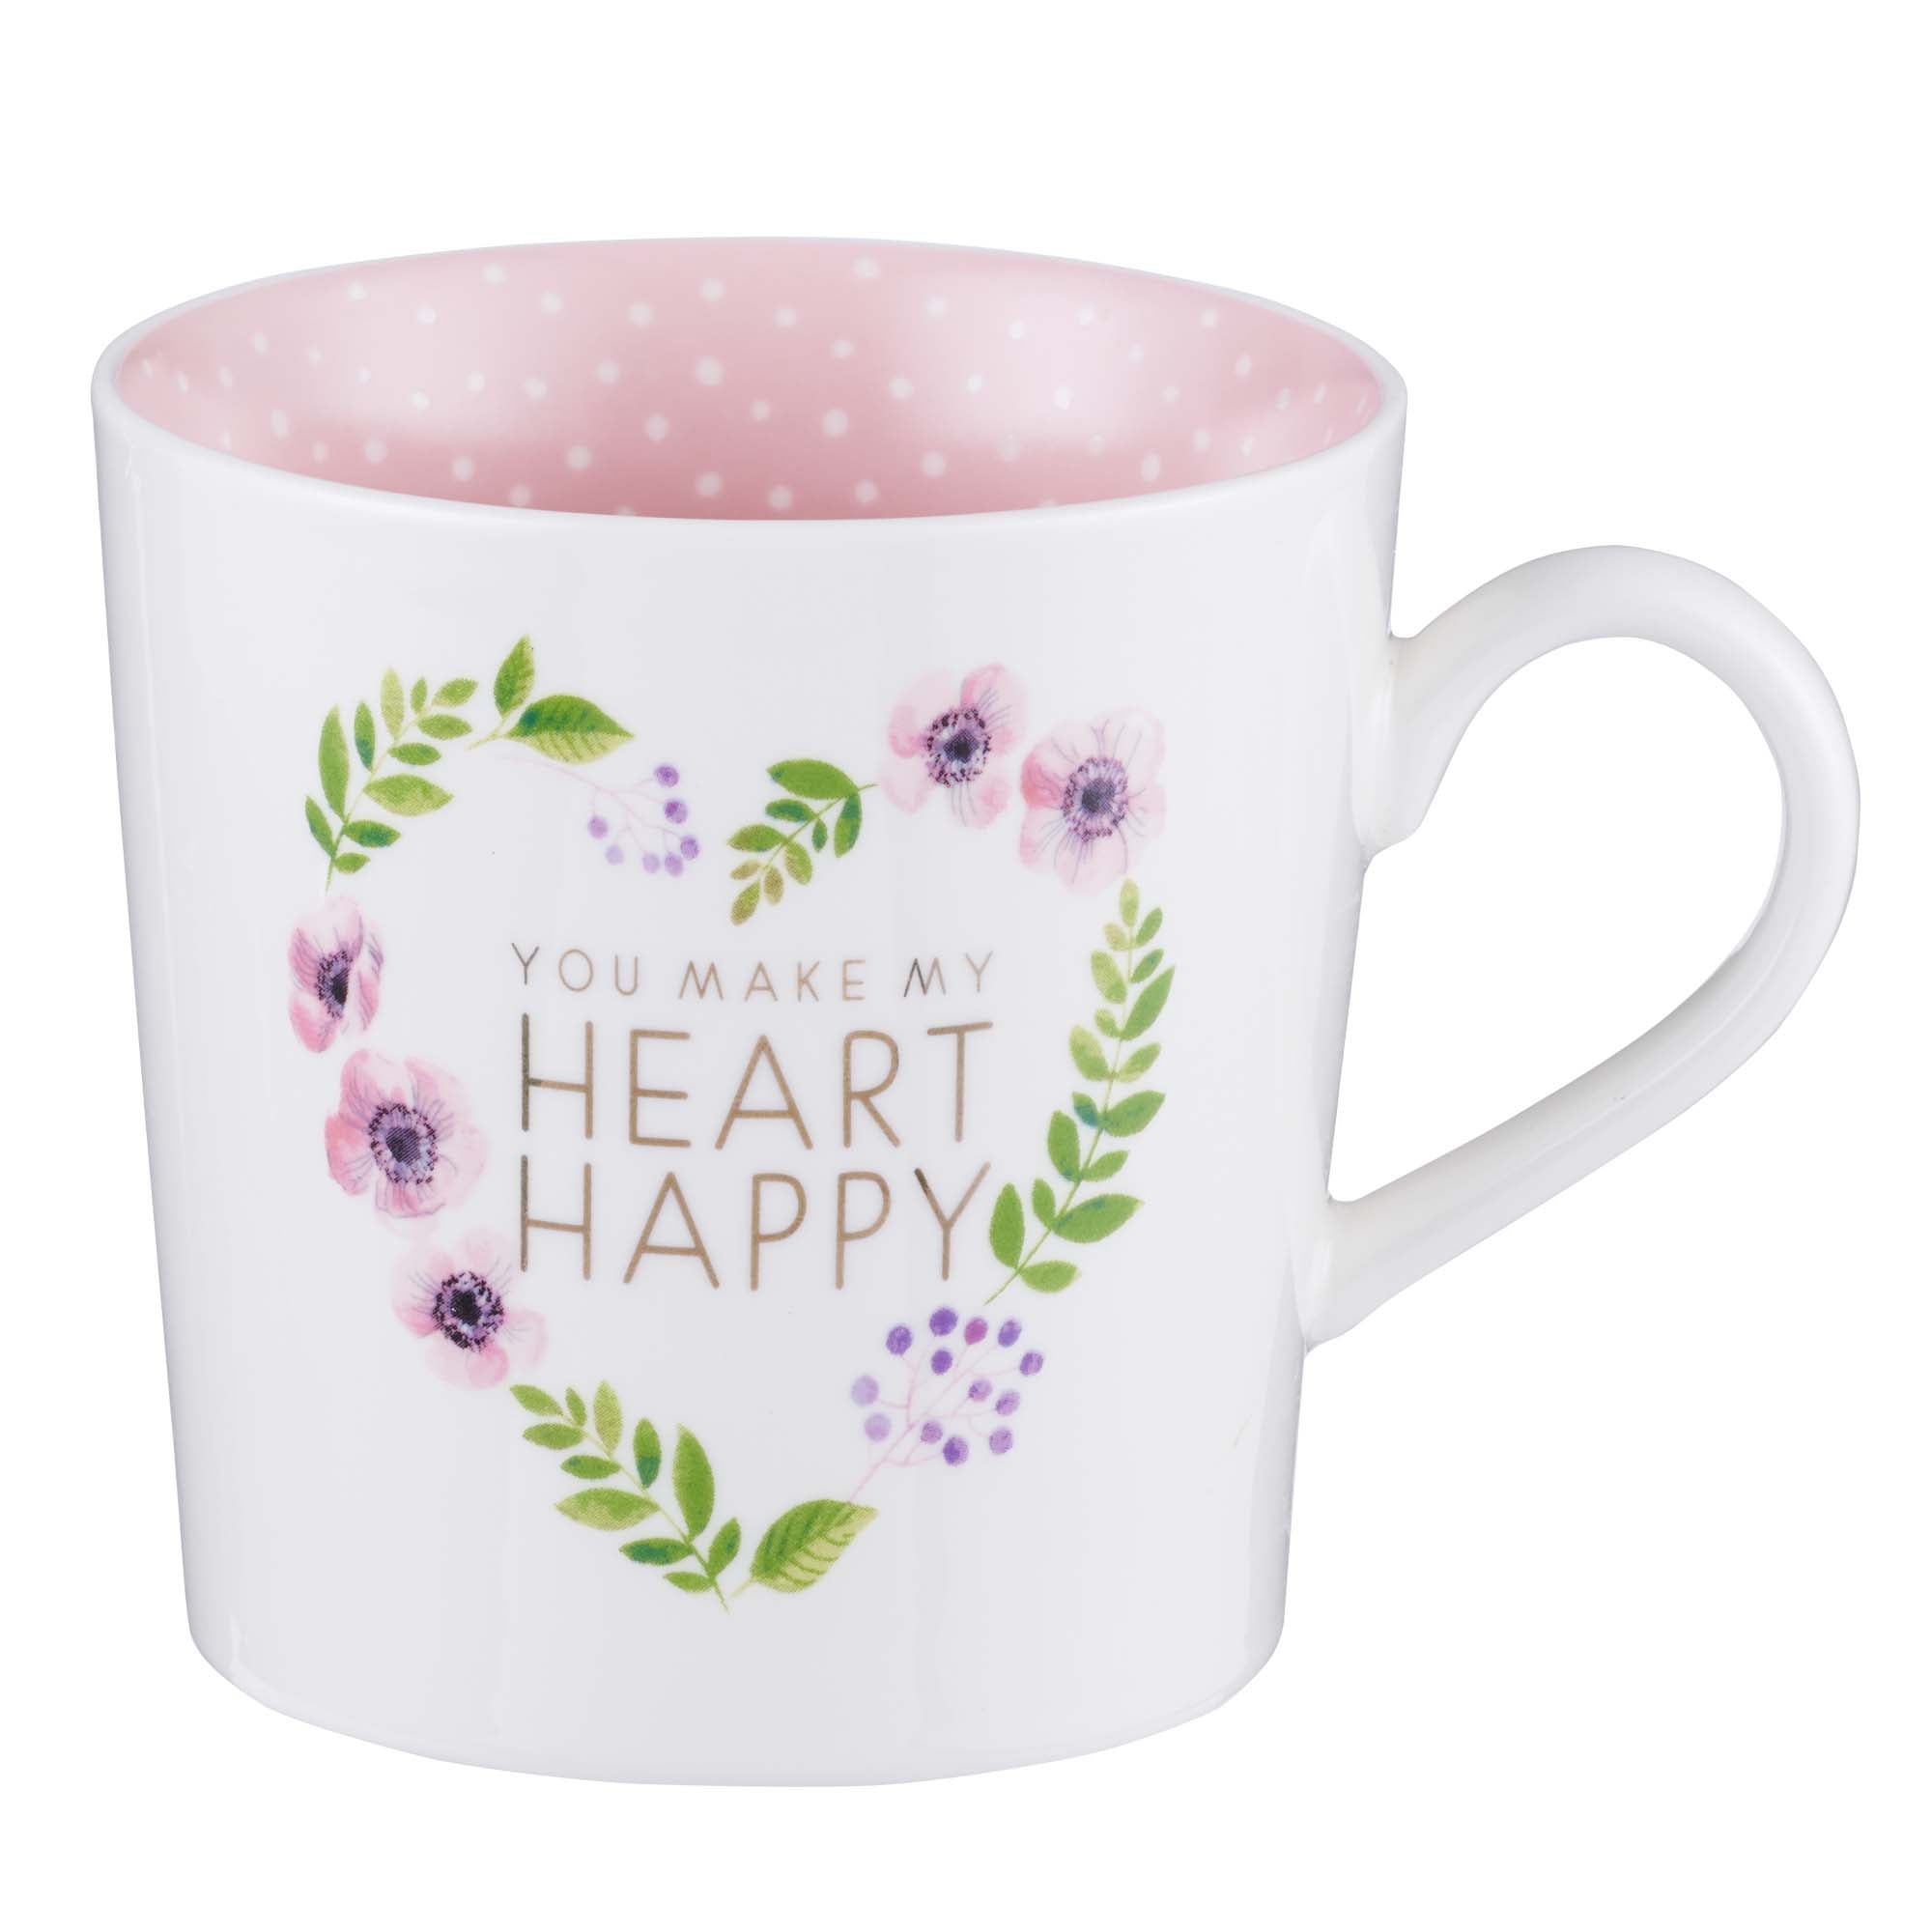 You Make My Heart Happy Ceramic Coffee Mug - The Amazing Grace Co